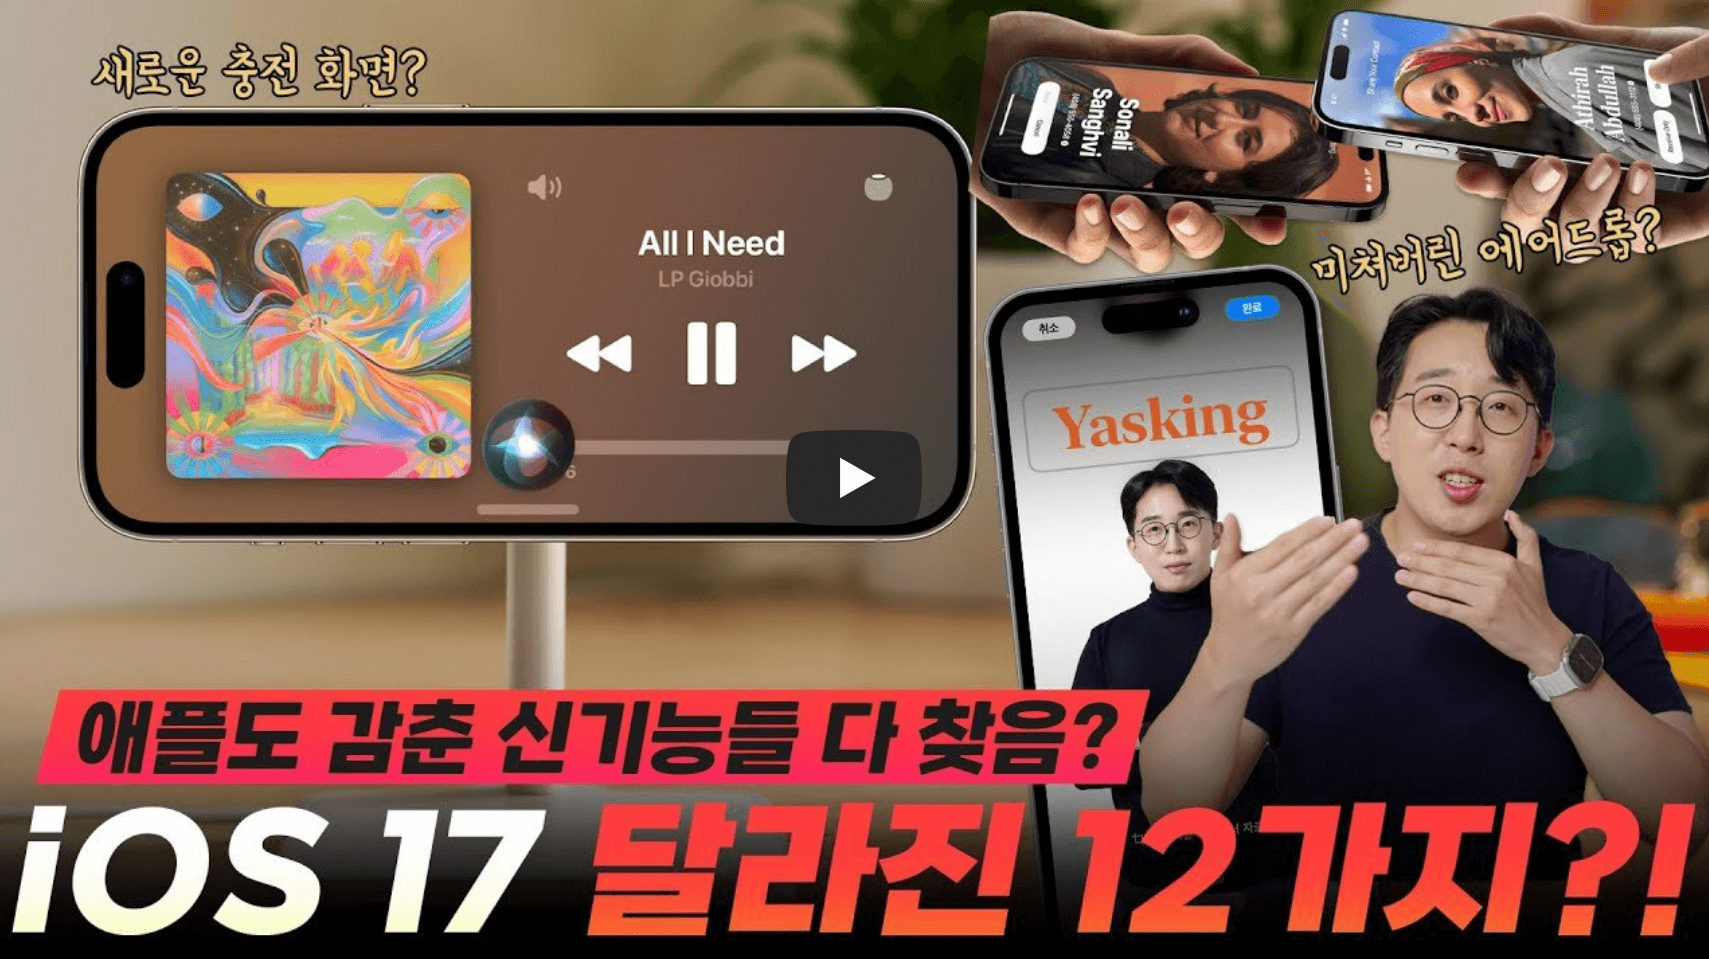 iOS 17 기능 소개 영상 섬네일